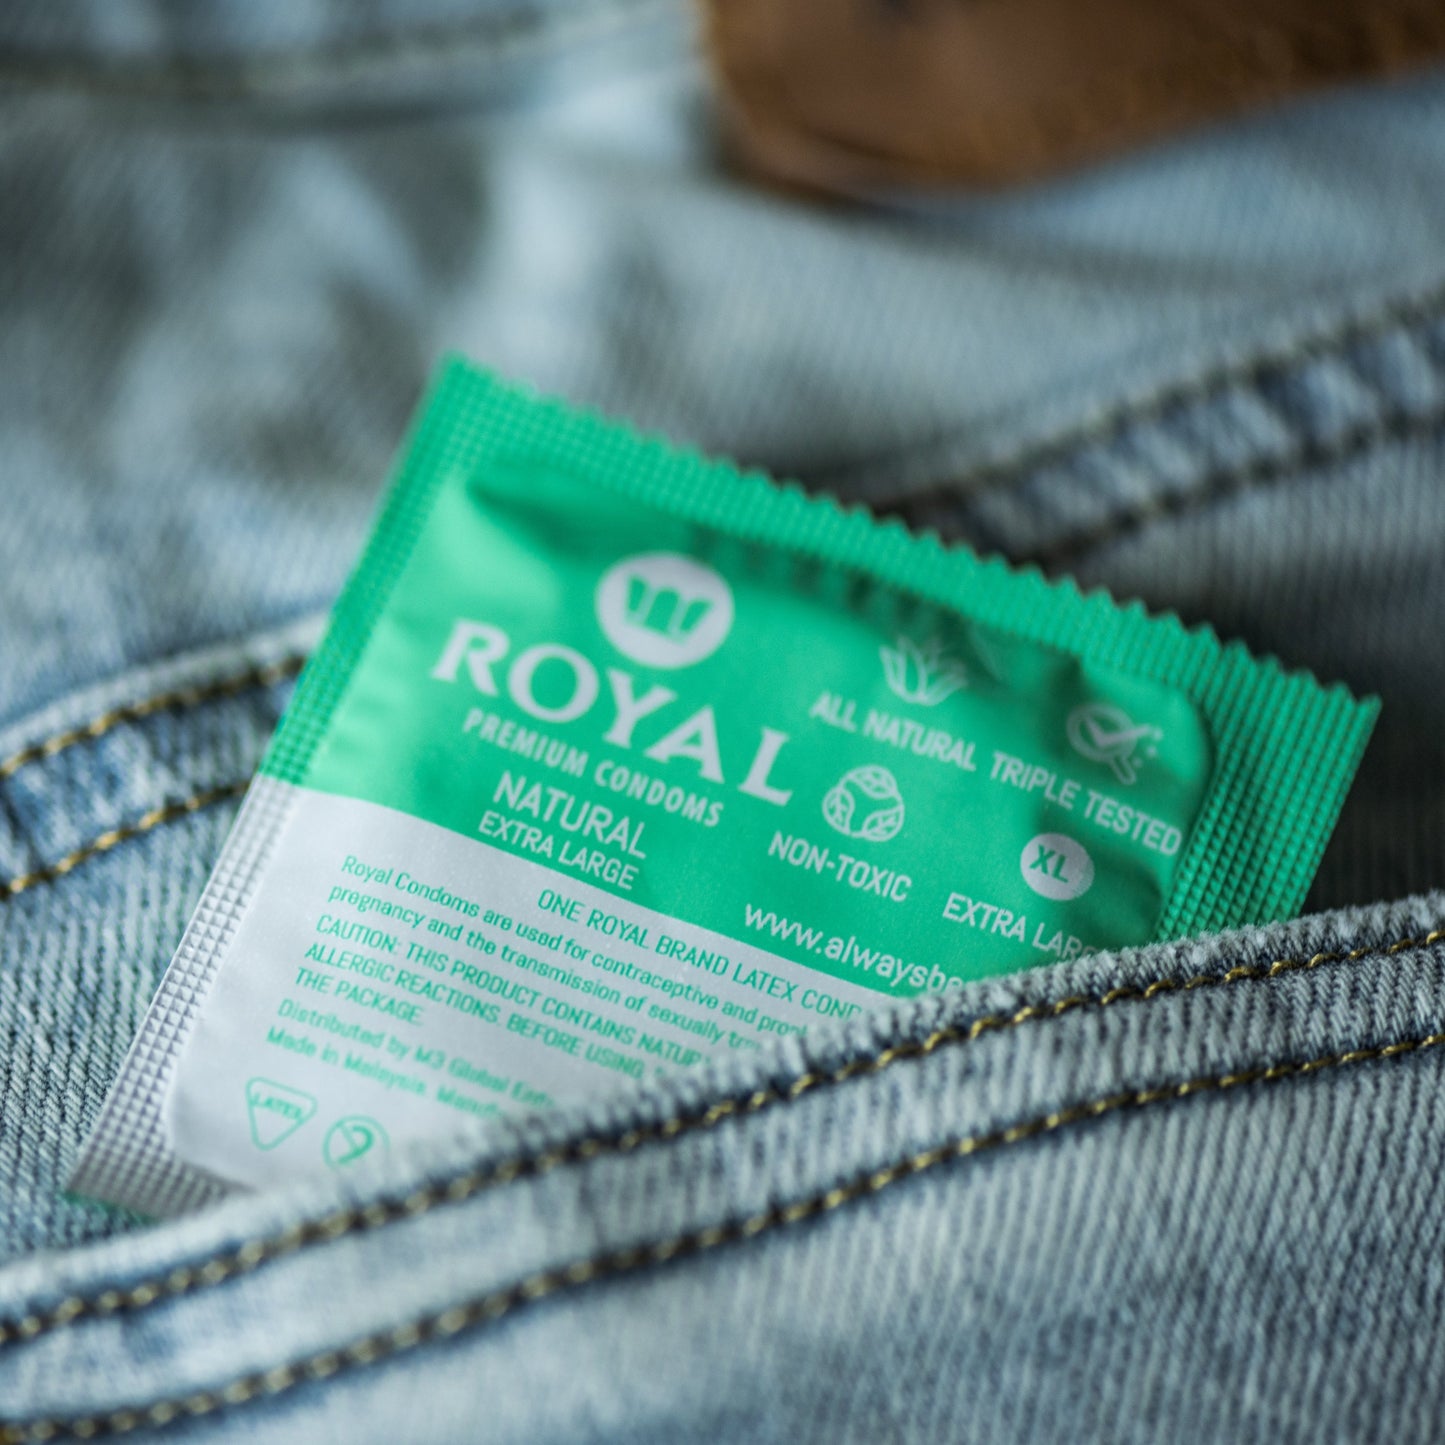 Extra Large Ultra Thin Vegan Latex Condoms - Royal Intimacy